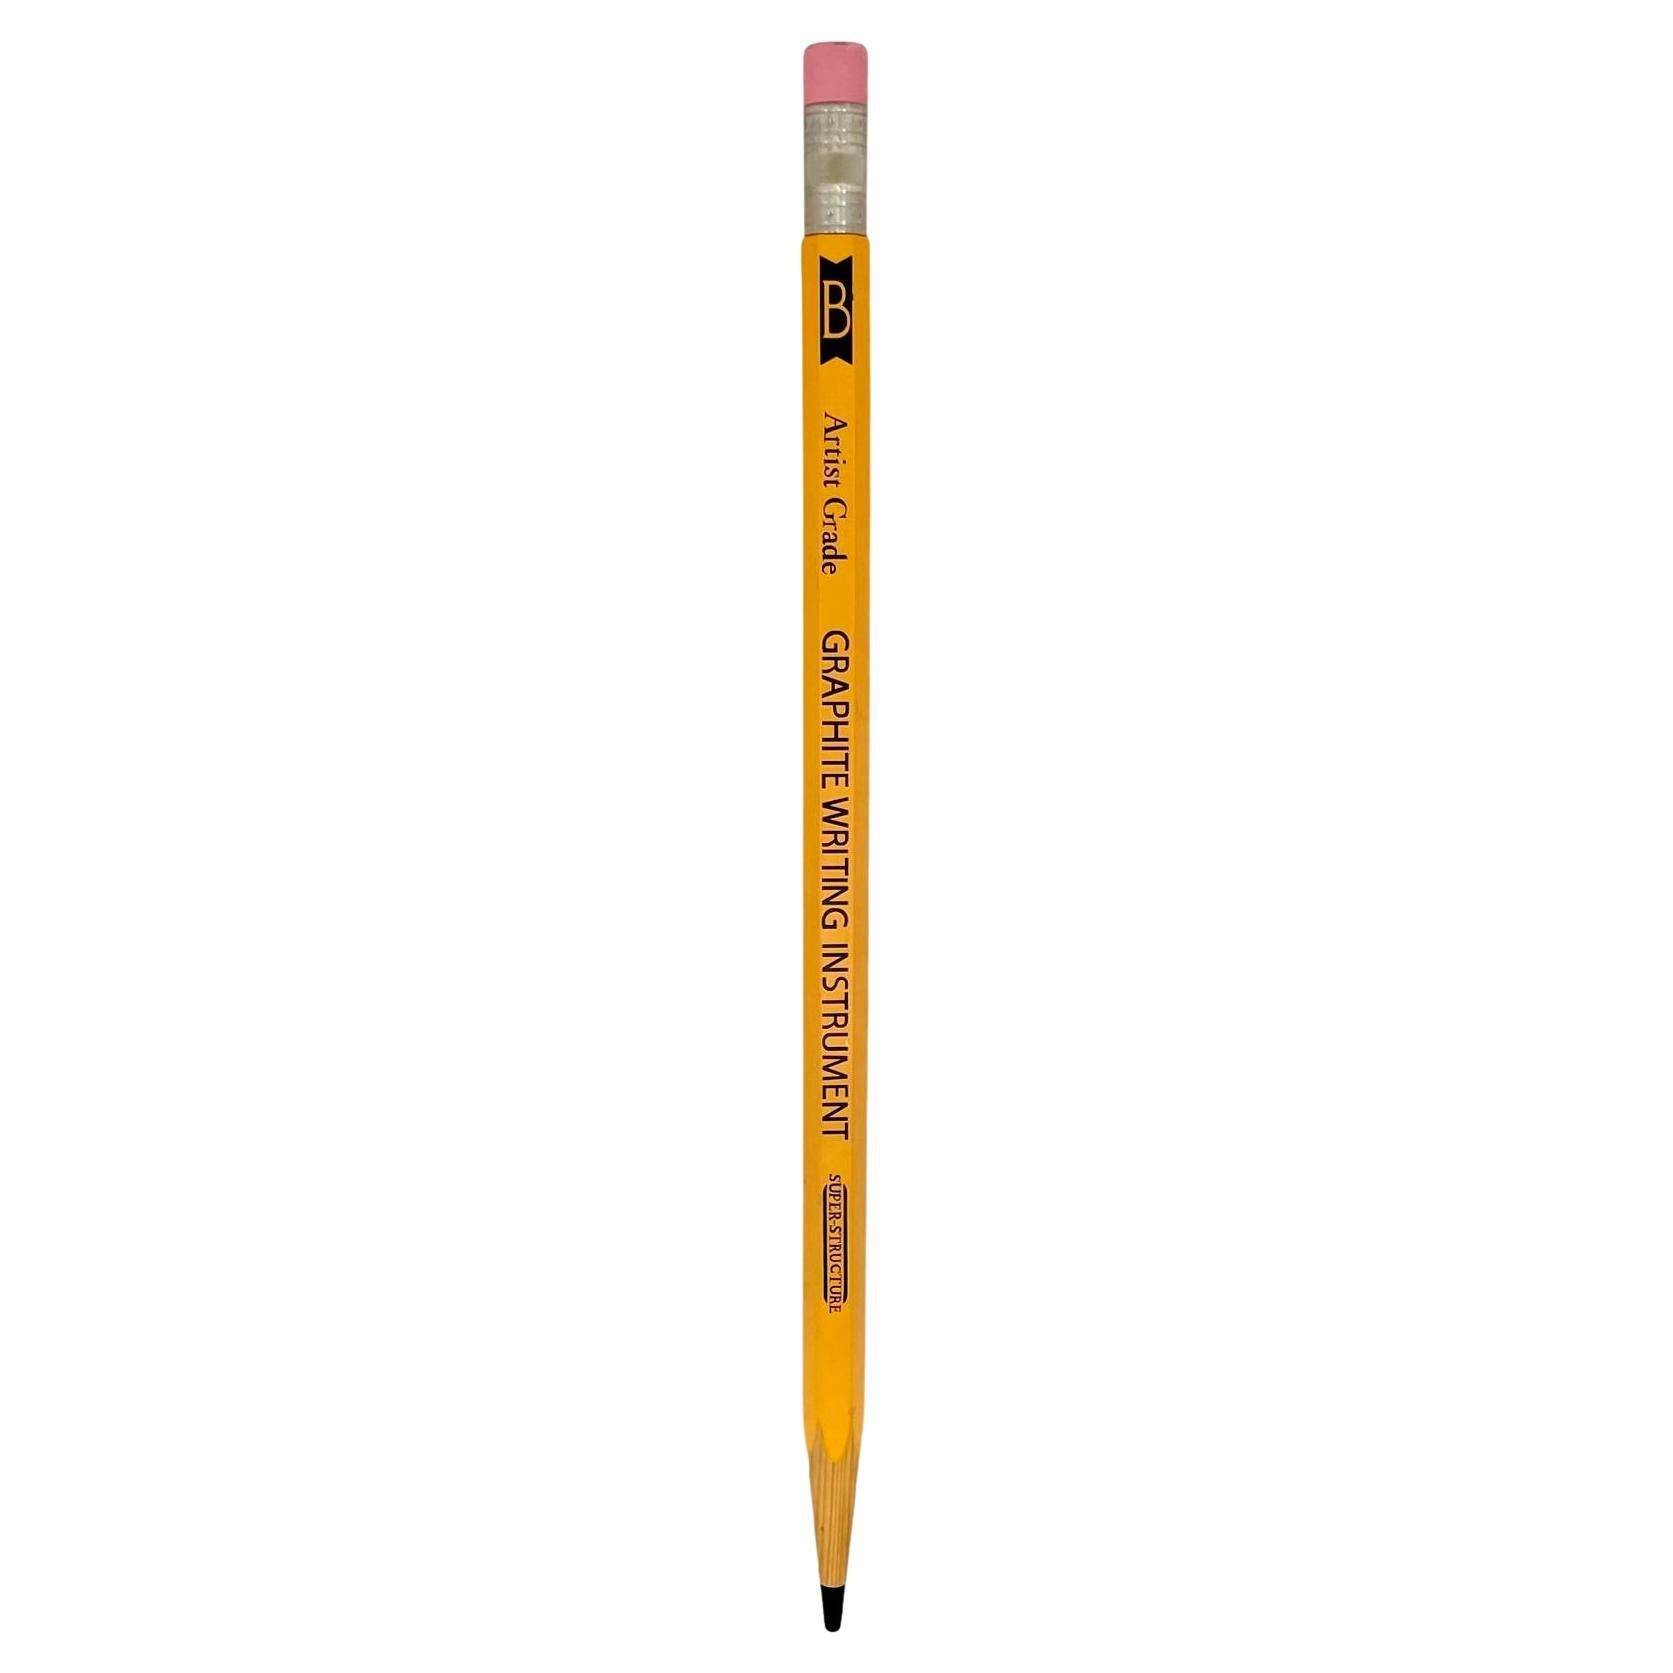 Crayon en bois Pop Art de 5 pieds de haut en vente